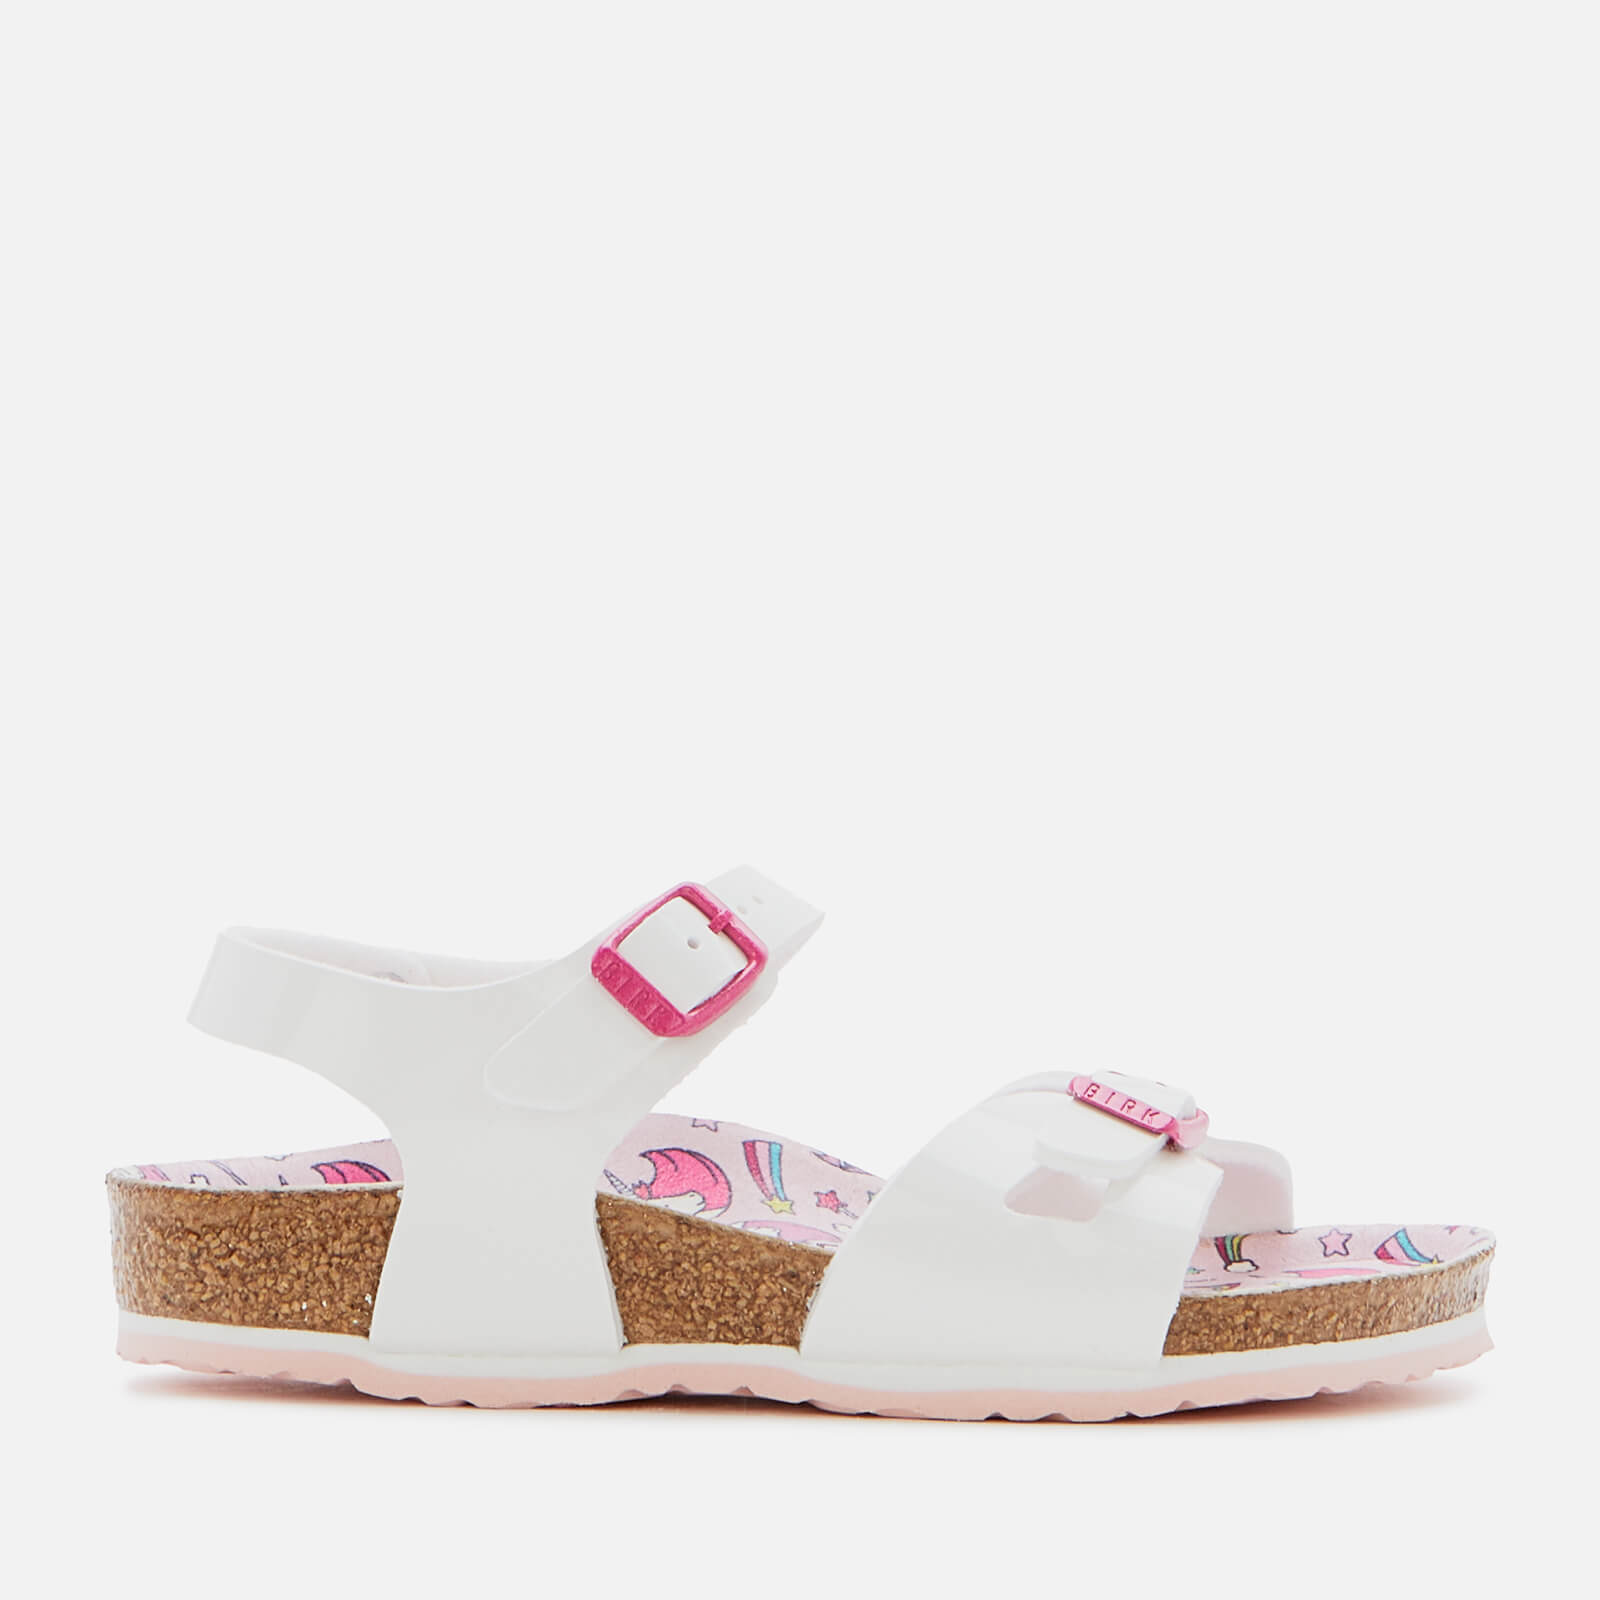 Birkenstock Rio Kids' Sandals - Patent White/Unicorn - UK 8 Toddlers